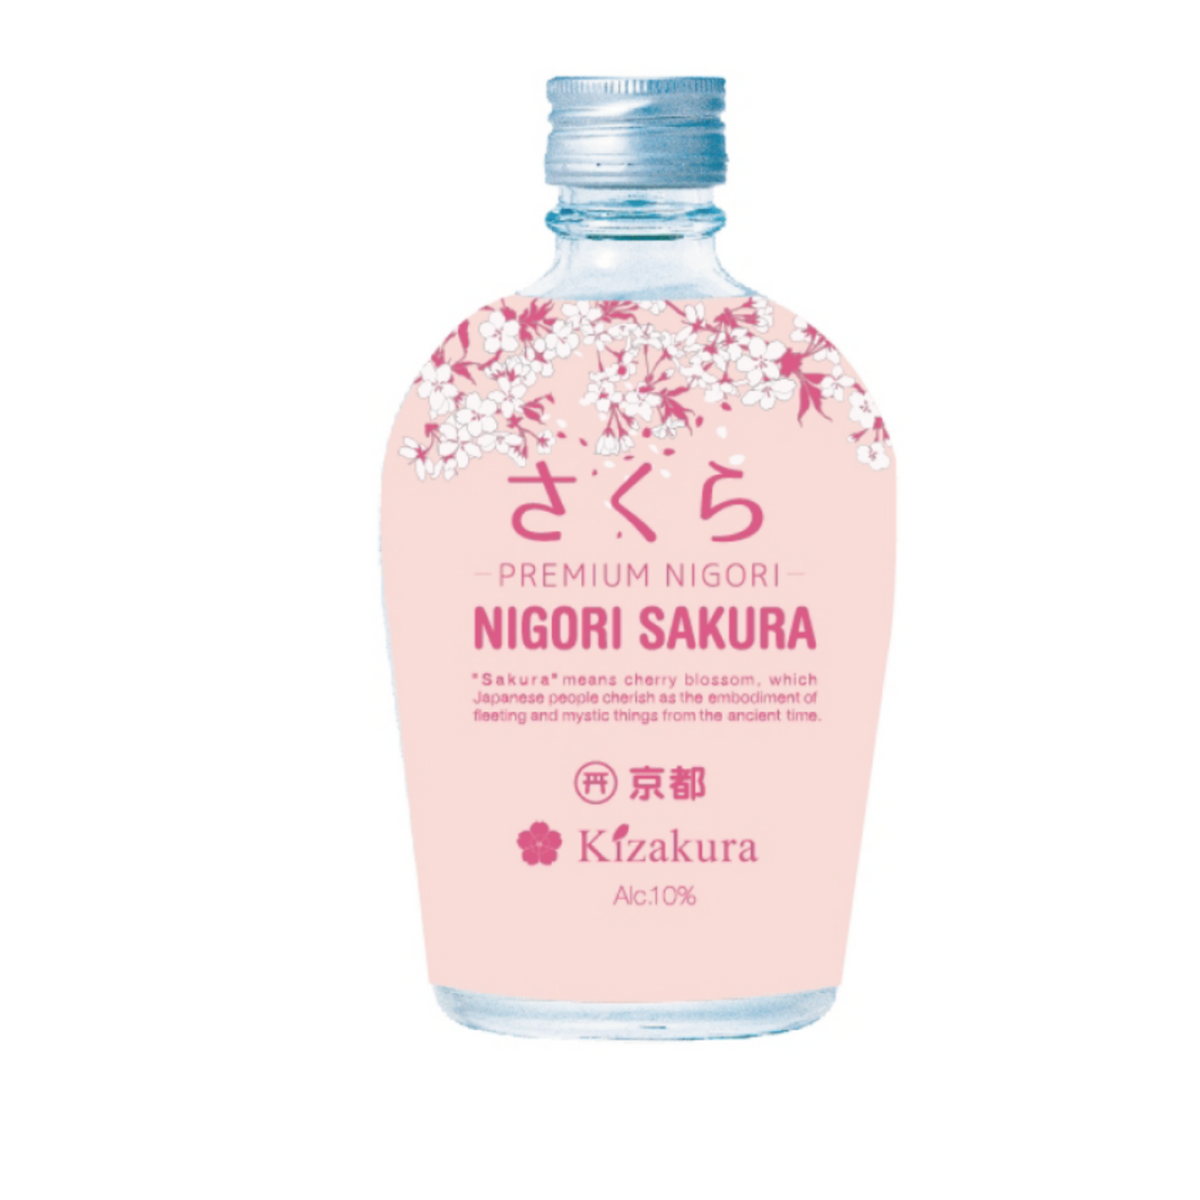 Pink Sakura: A Cherry Blossom Nigori Sake Cocktail